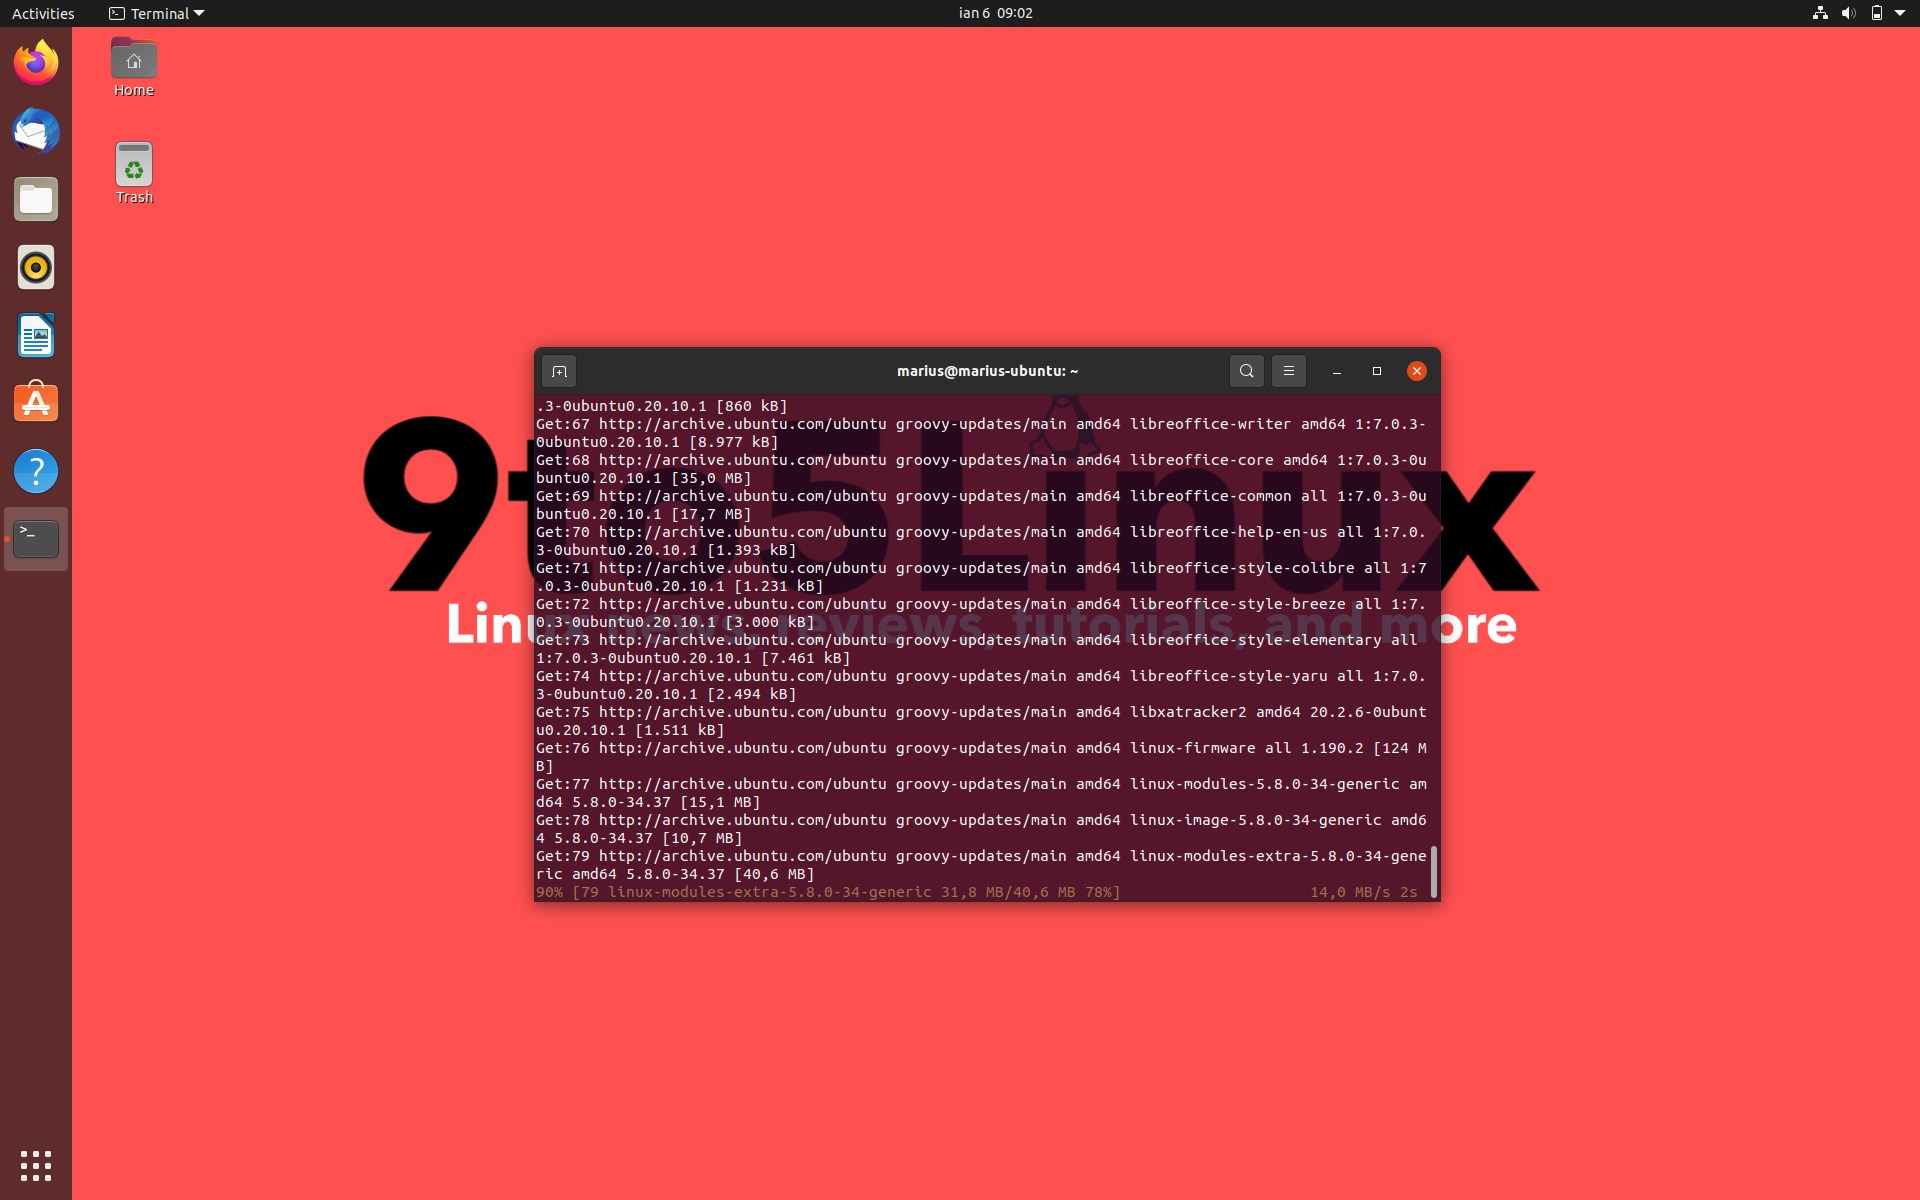 New Ubuntu Linux Kernel Security Updates Fix 14 Vulnerabilities, Patch Now